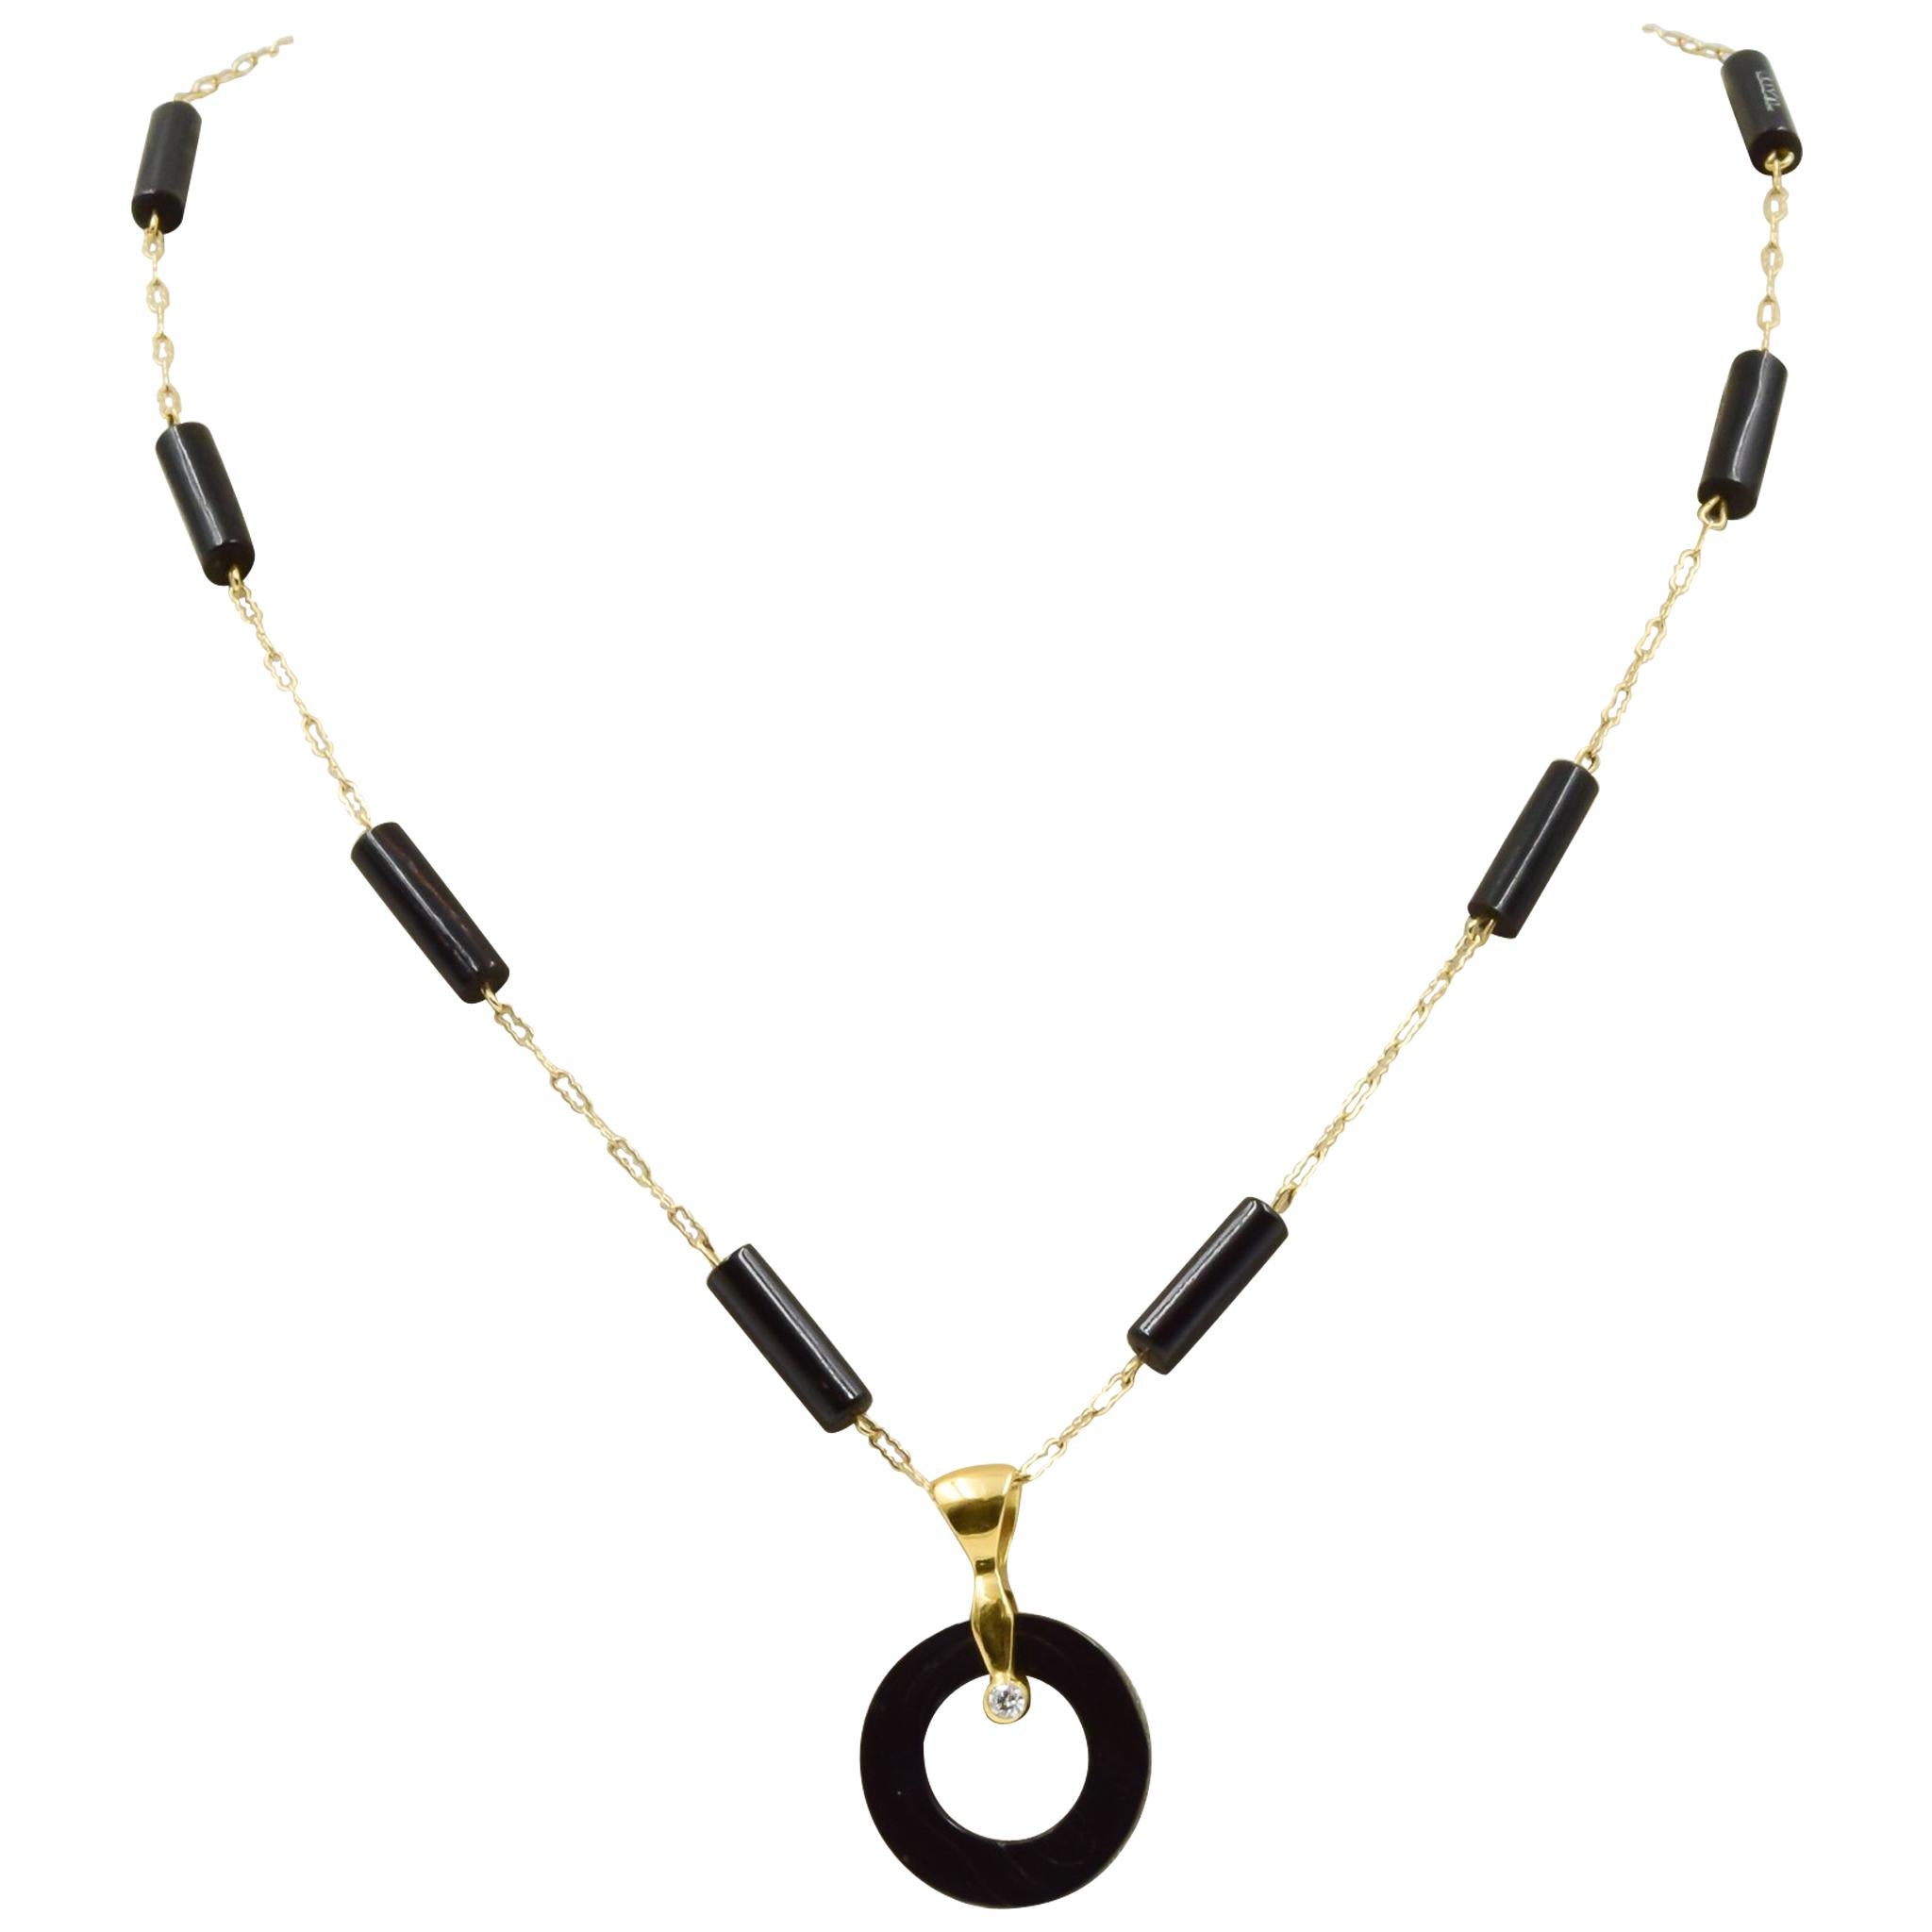 Bernard Passman "Dainty" Black Coral and 14 Karat Gold Chain Necklace